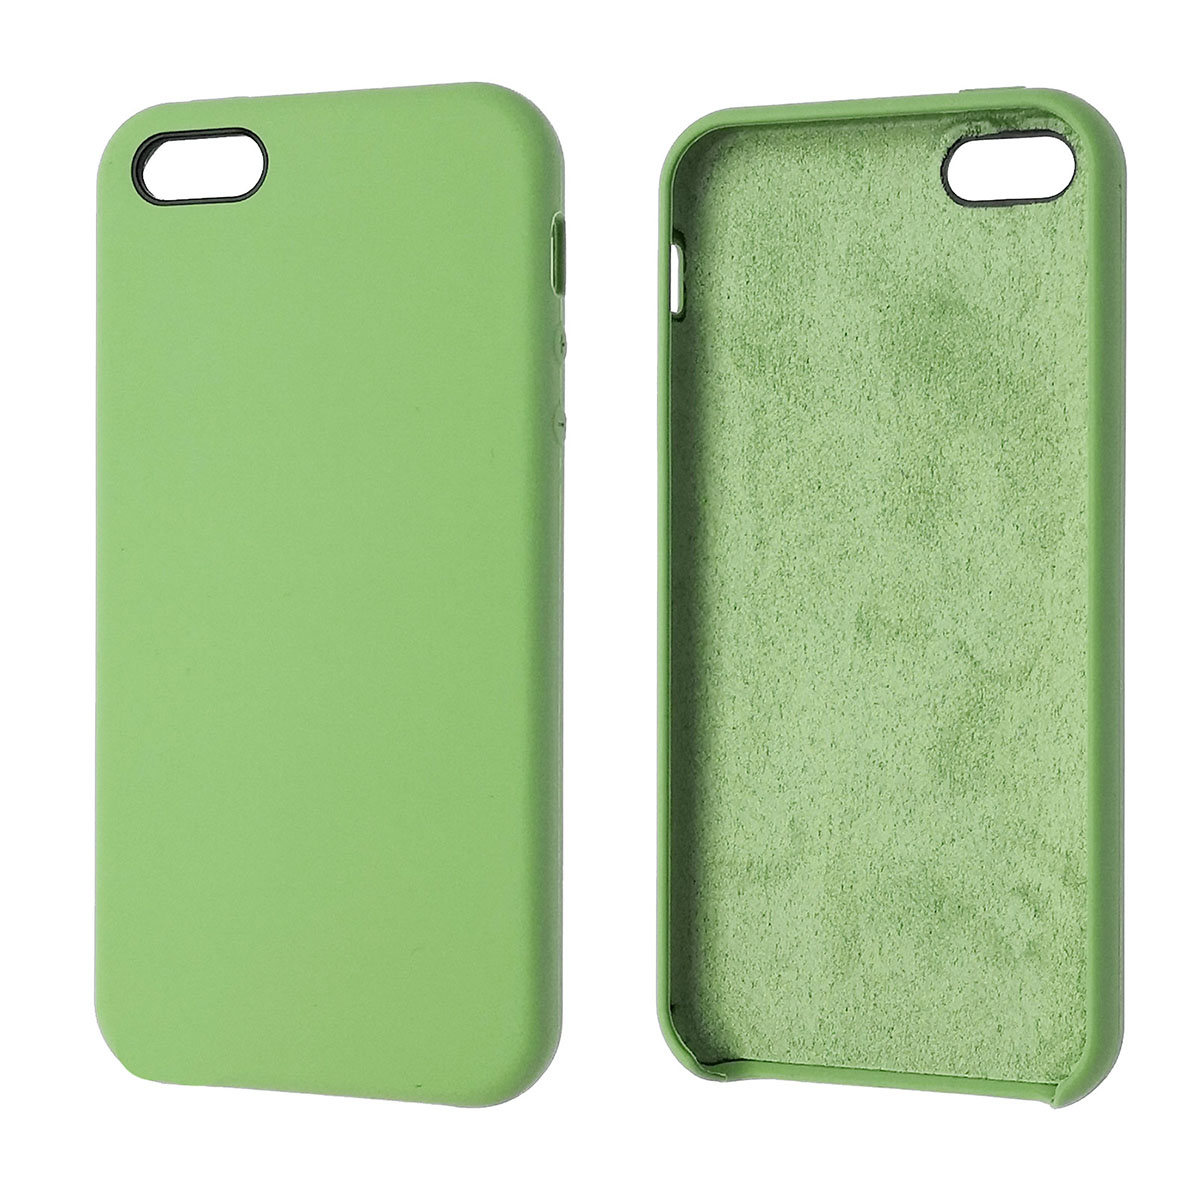 Чехол накладка Silicon Case для APPLE iPhone 5, 5S, SE, силикон, бархат, цвет темно салатовый